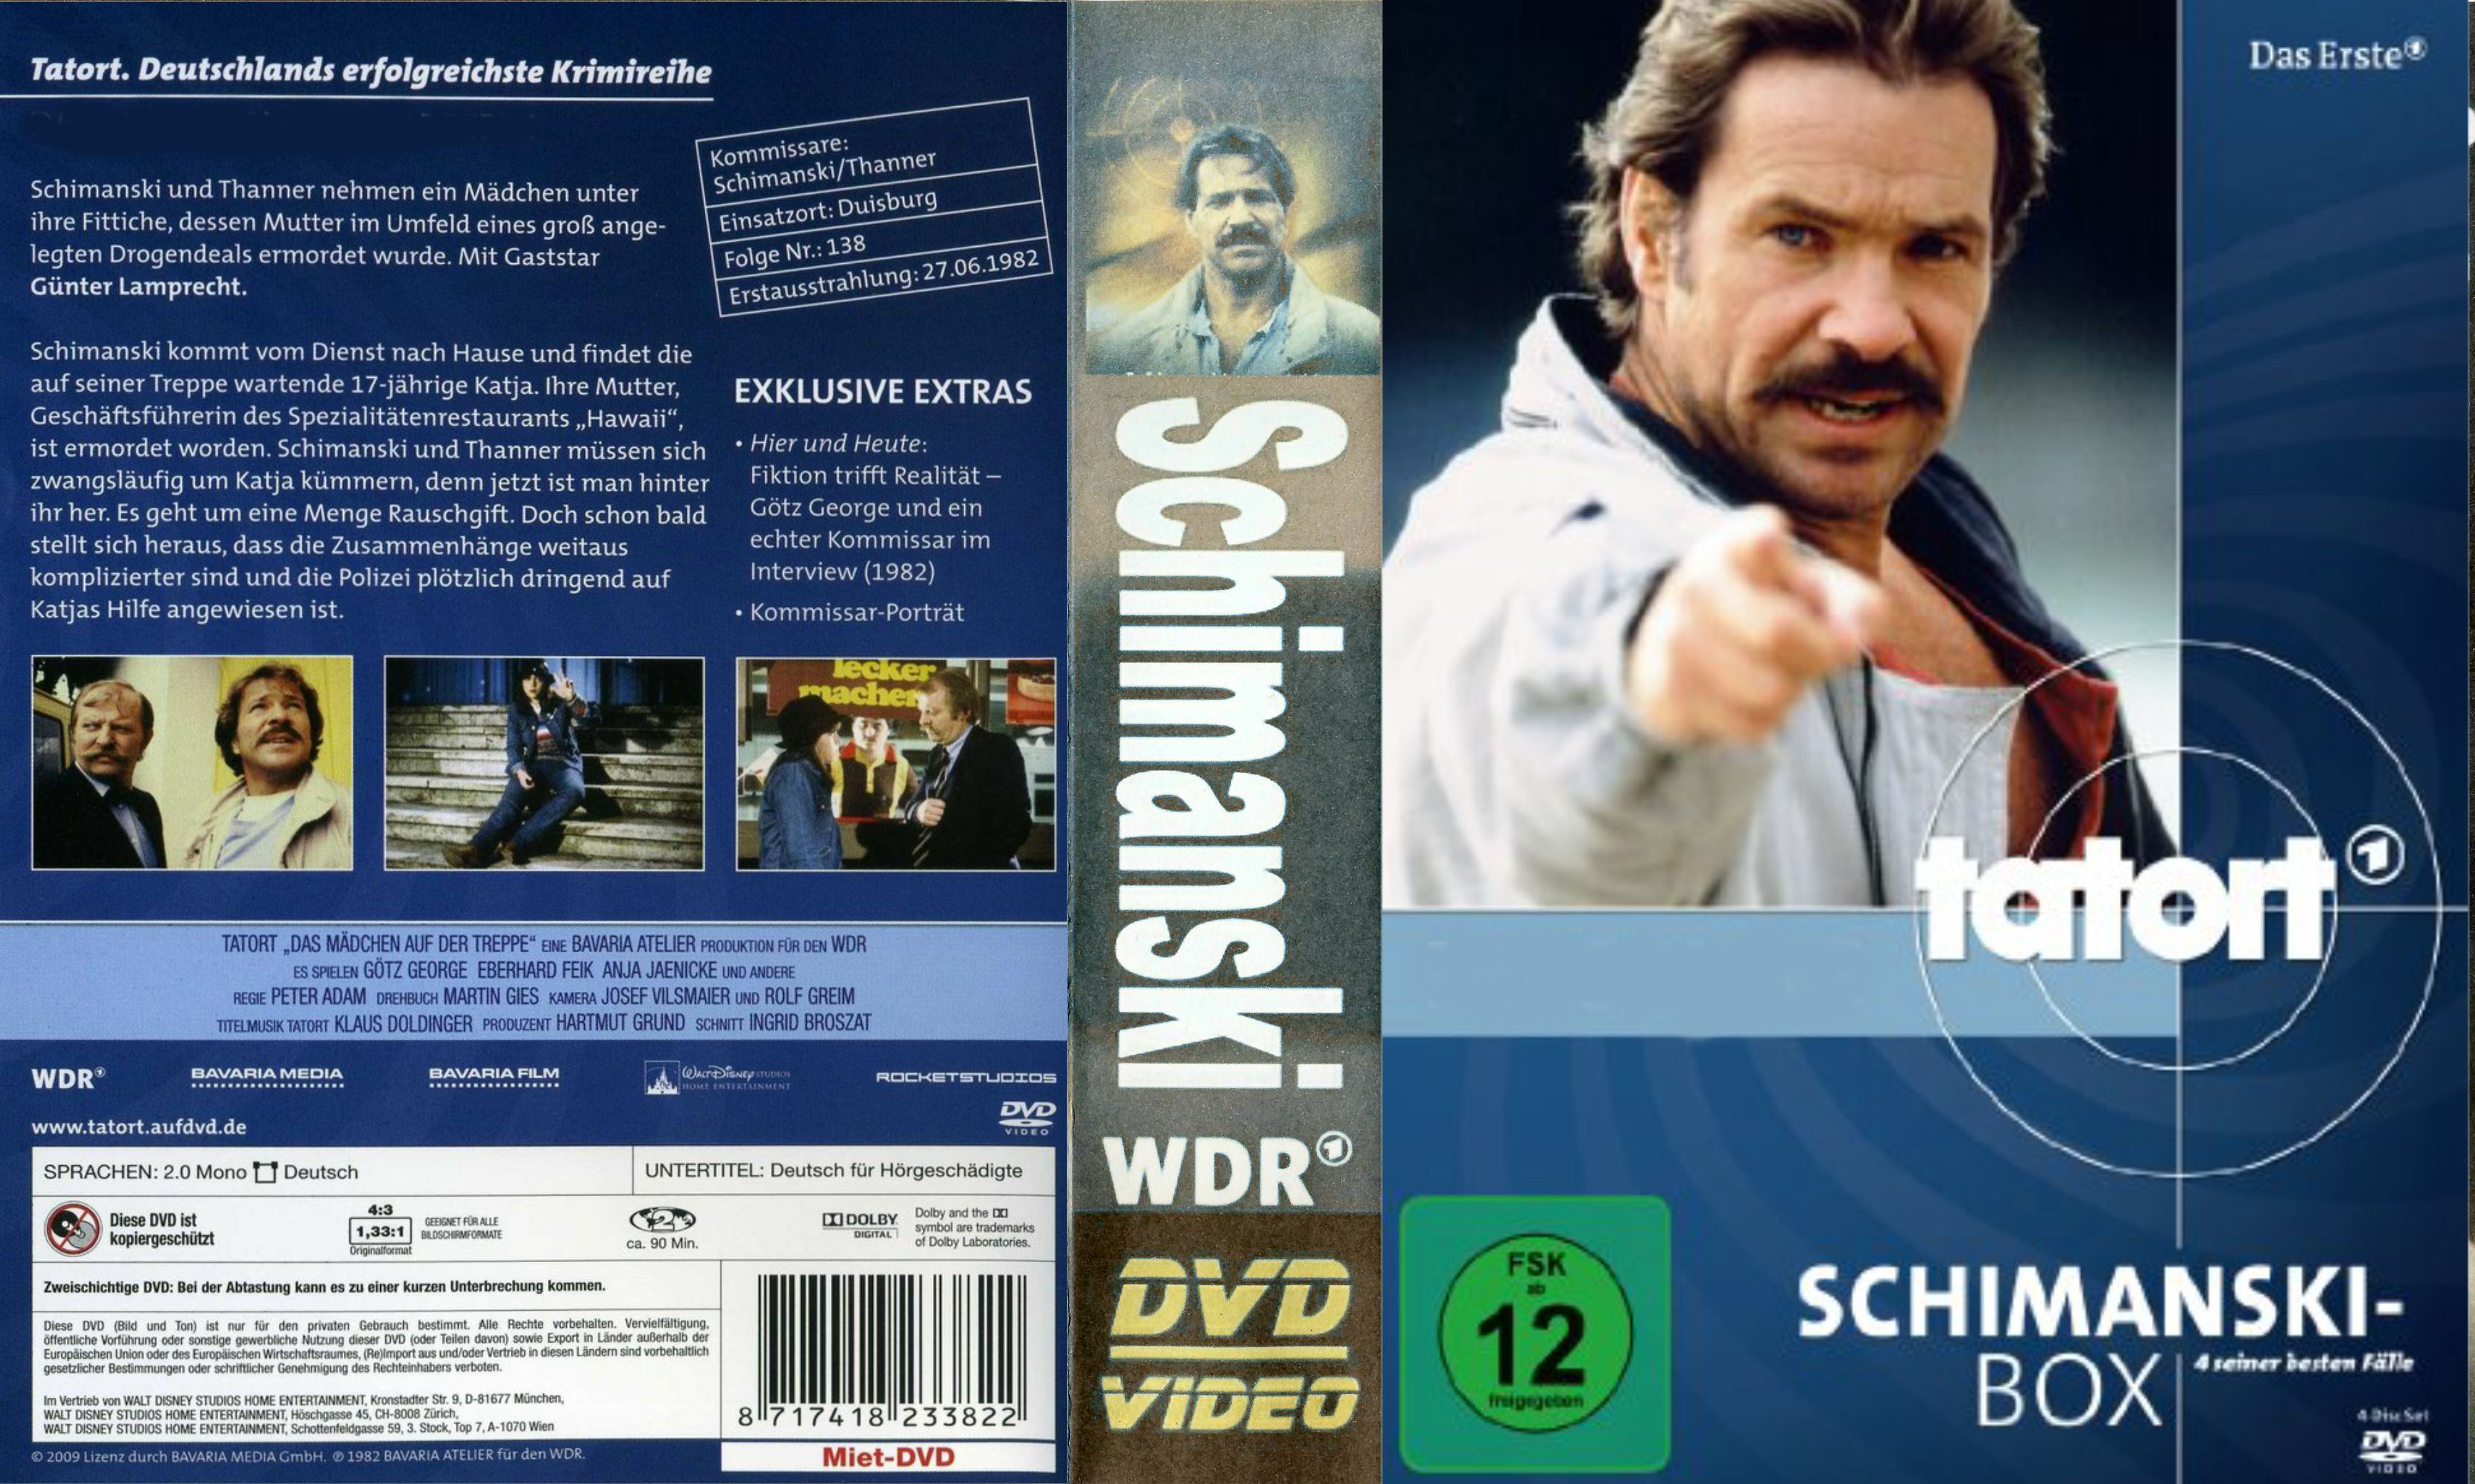 Schimanski Collectie Tatort No Subs - DvD 17